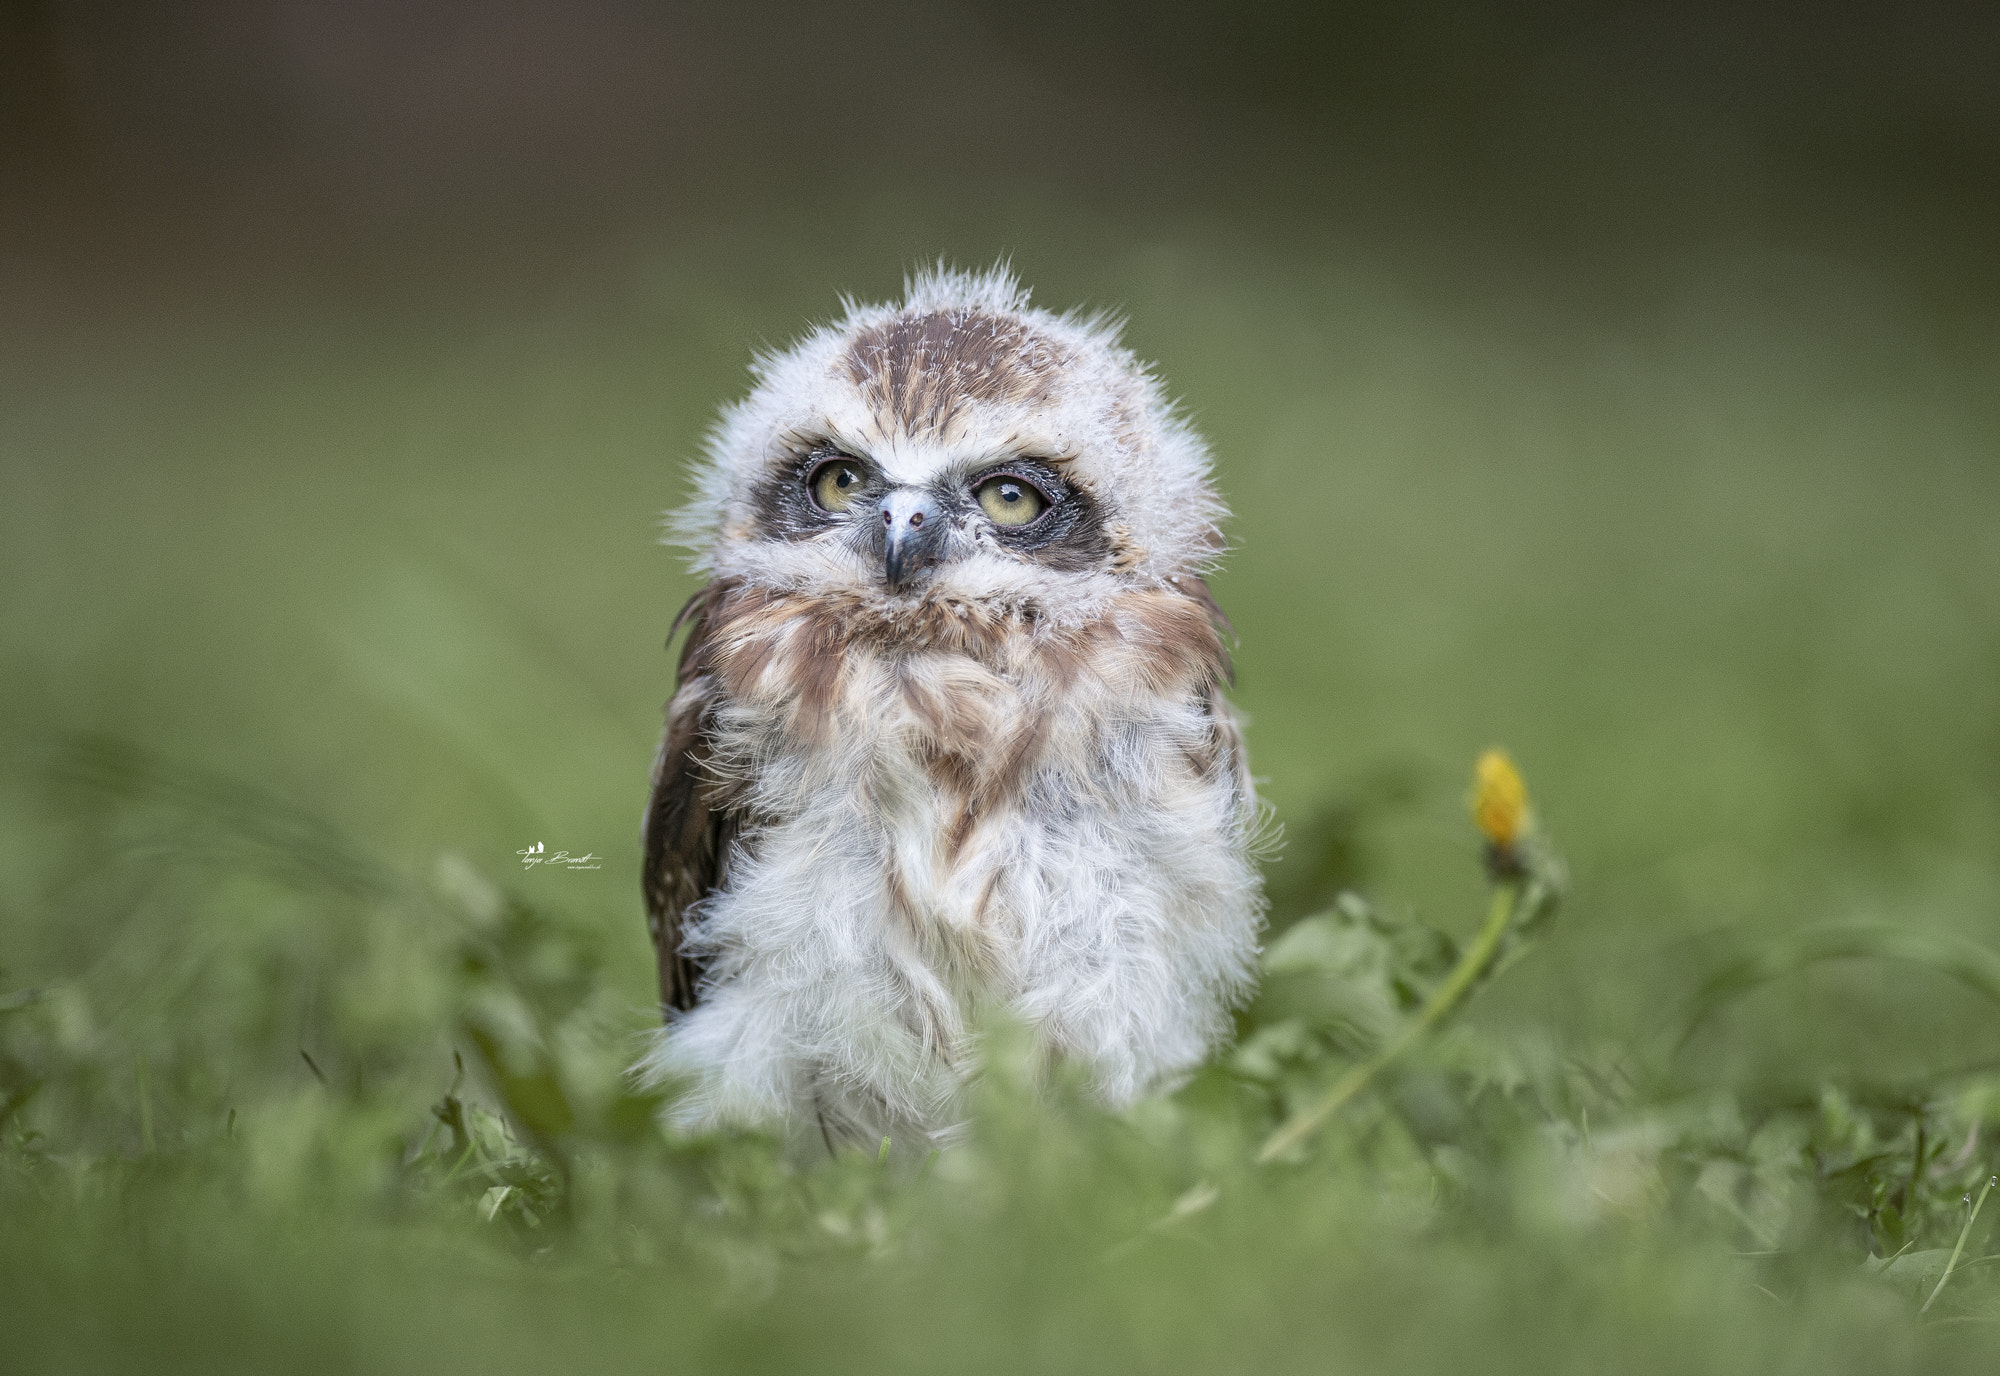 Baby Animal Owlet 2000x1376